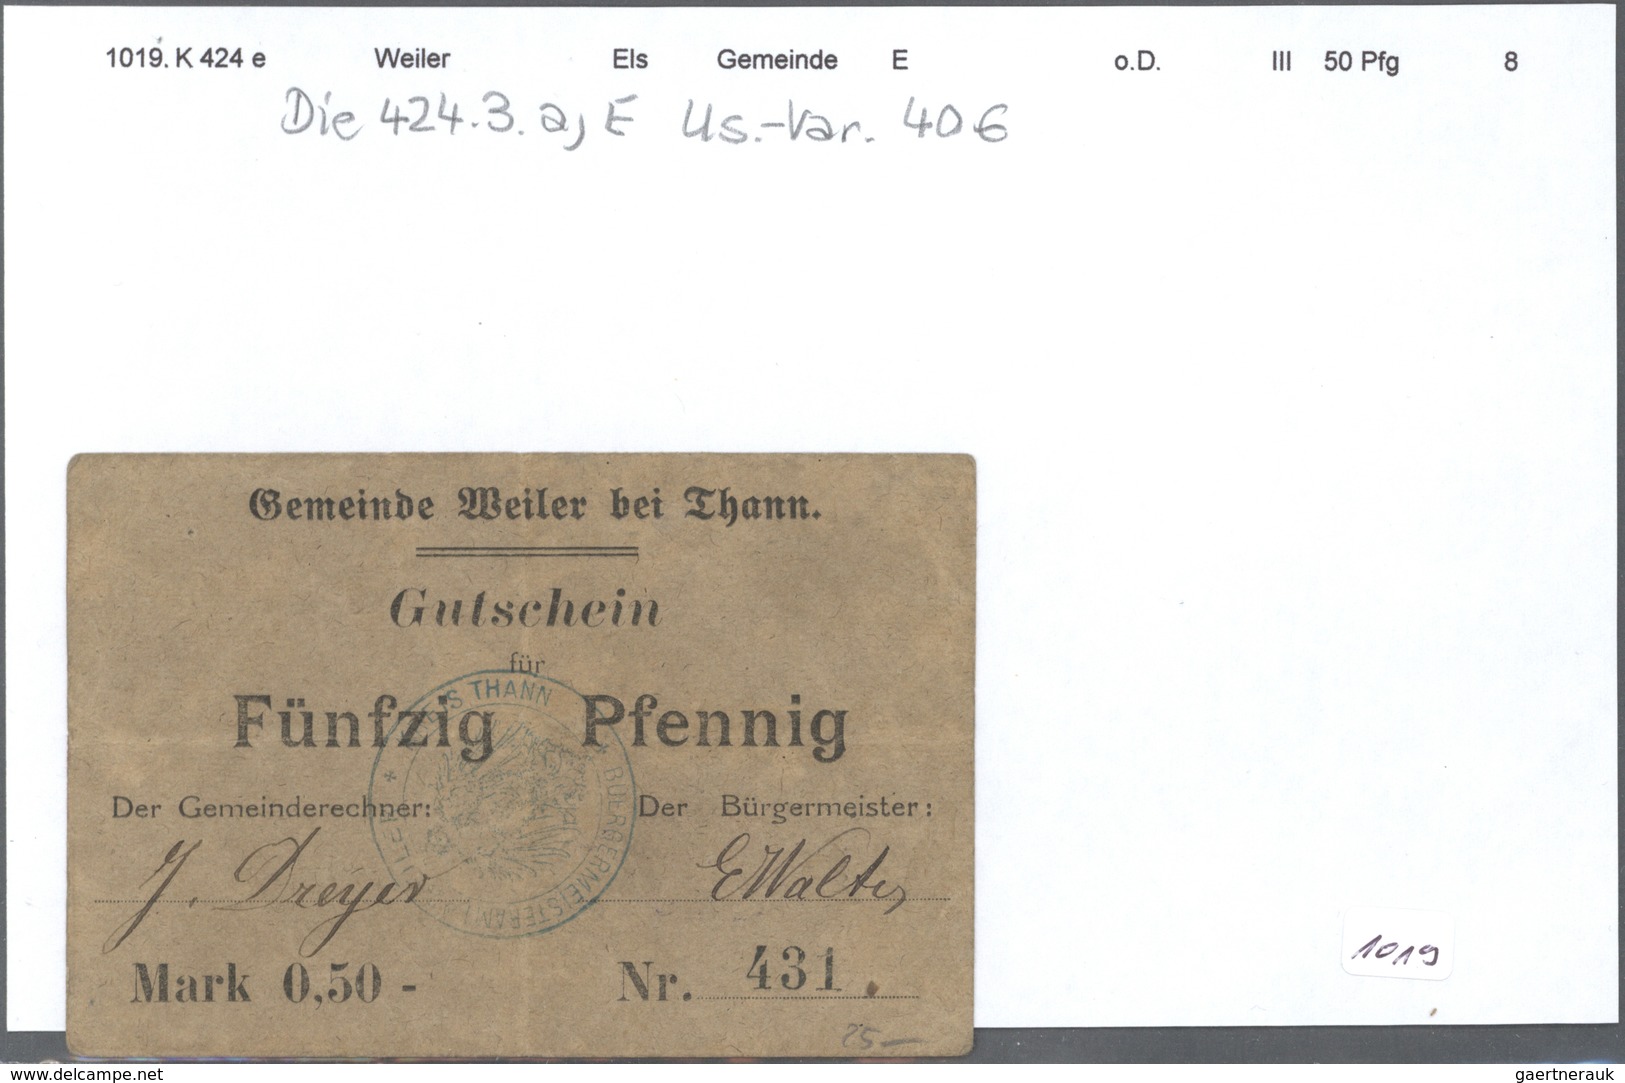 Deutschland - Notgeld - Elsass-Lothringen: Weiler bei Thann, Oberelsass, Gemeinde, 50 Pf. (5), 1 (2)